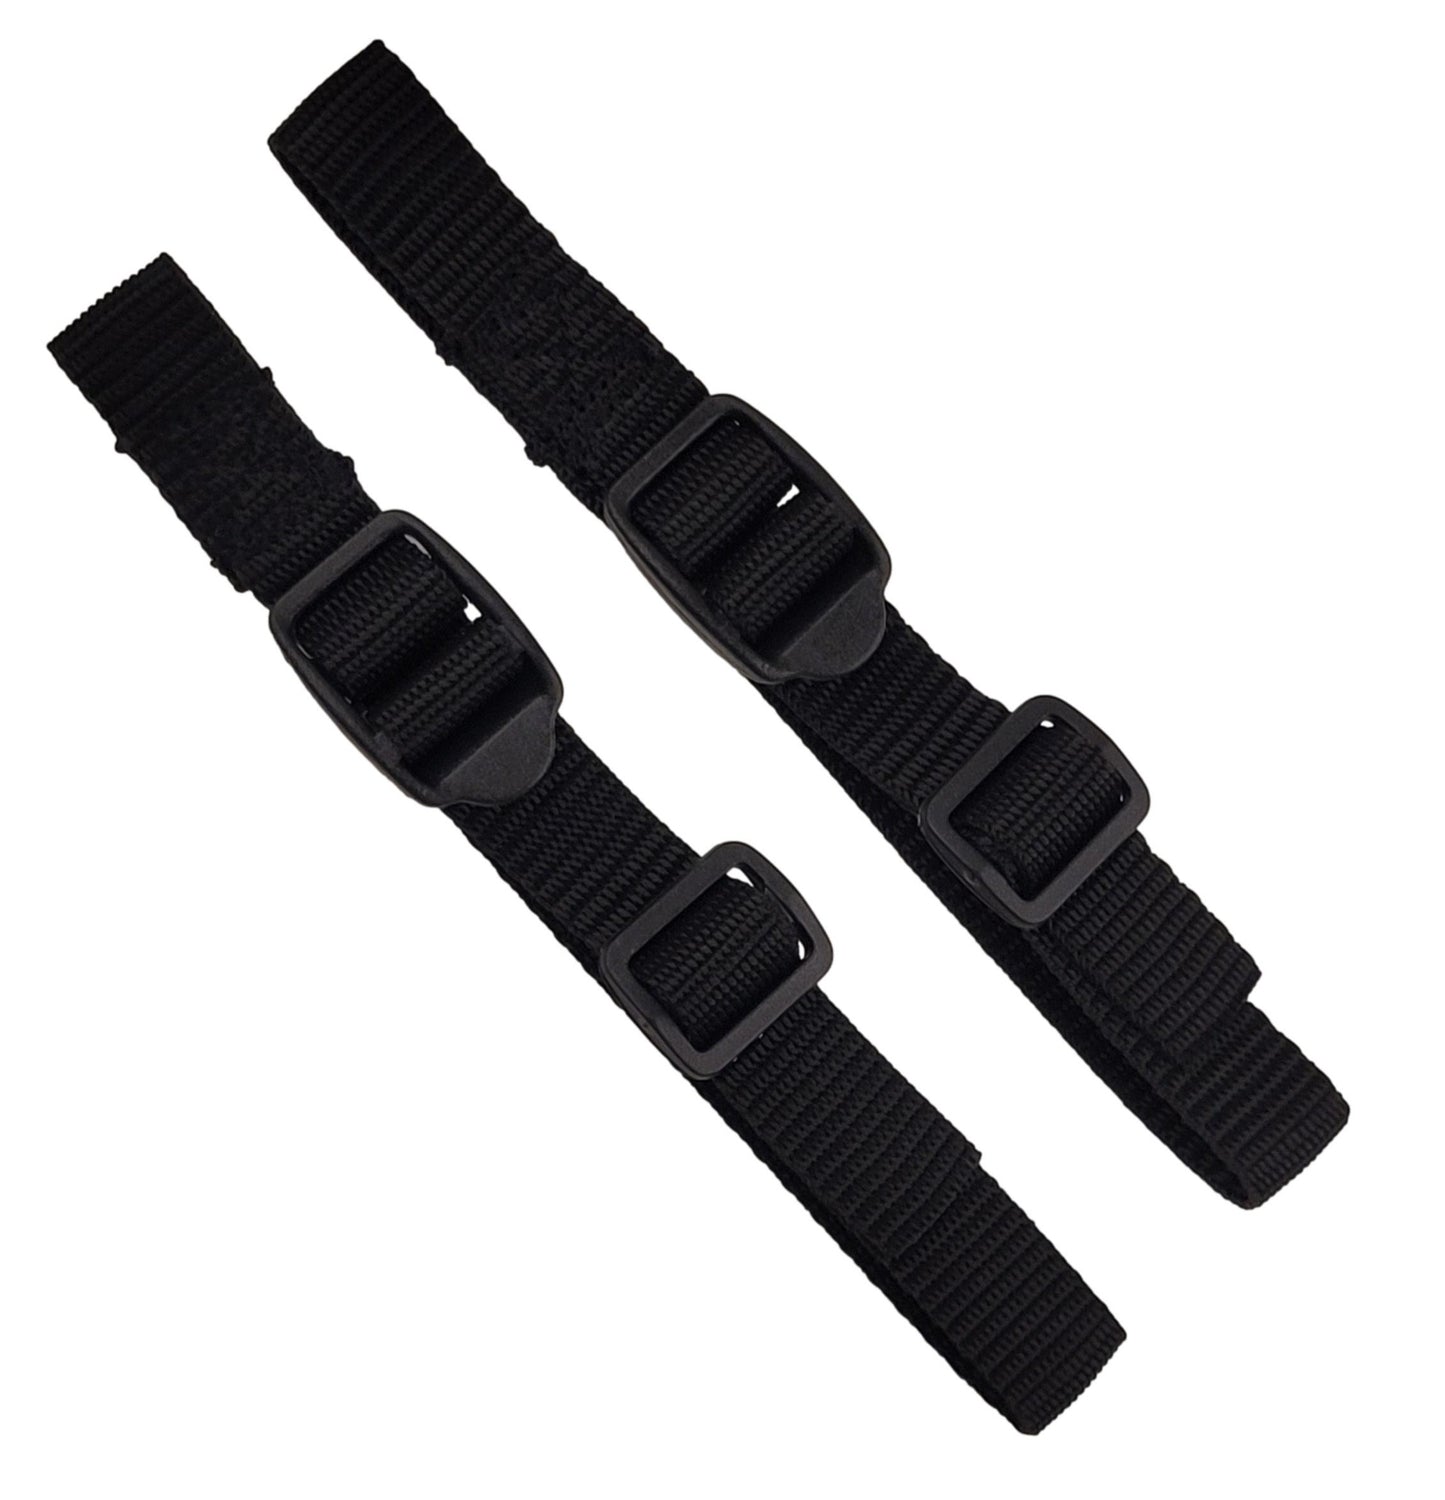 19mm webbing strap in black with ladderlock buckle (pair) (4)